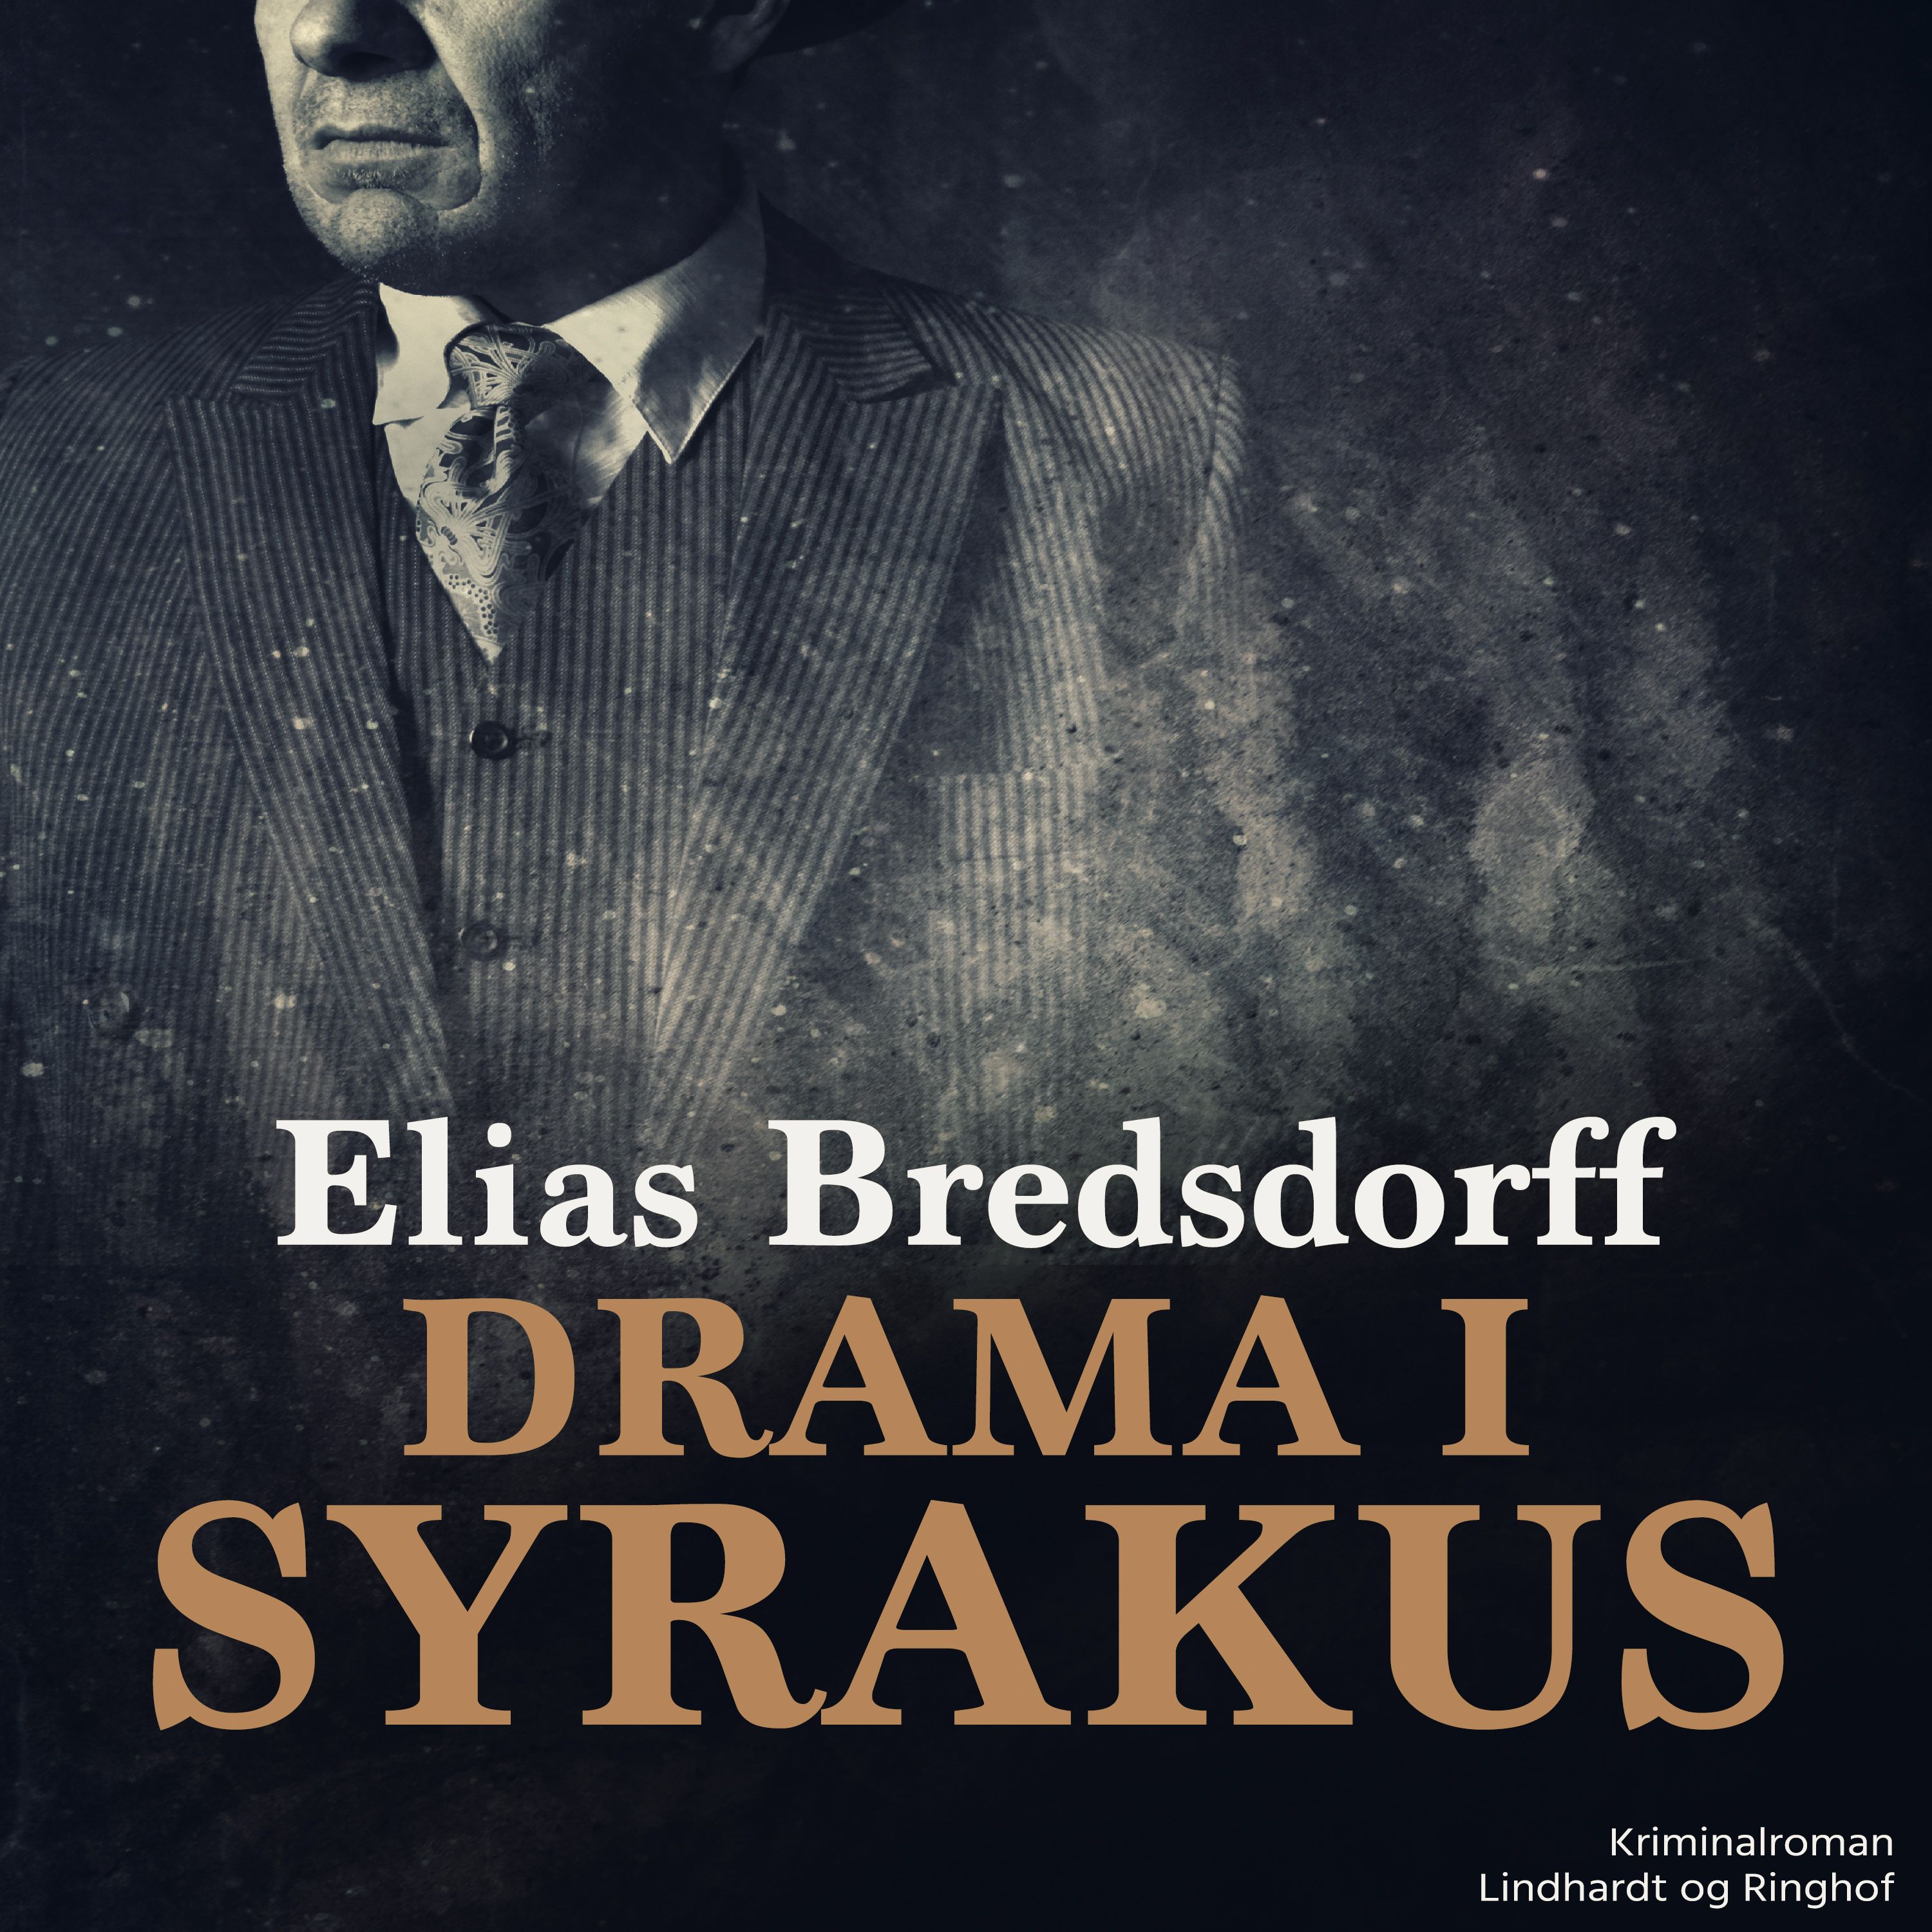 Drama i Syrakus, ljudbok av Elias Bredsdorff